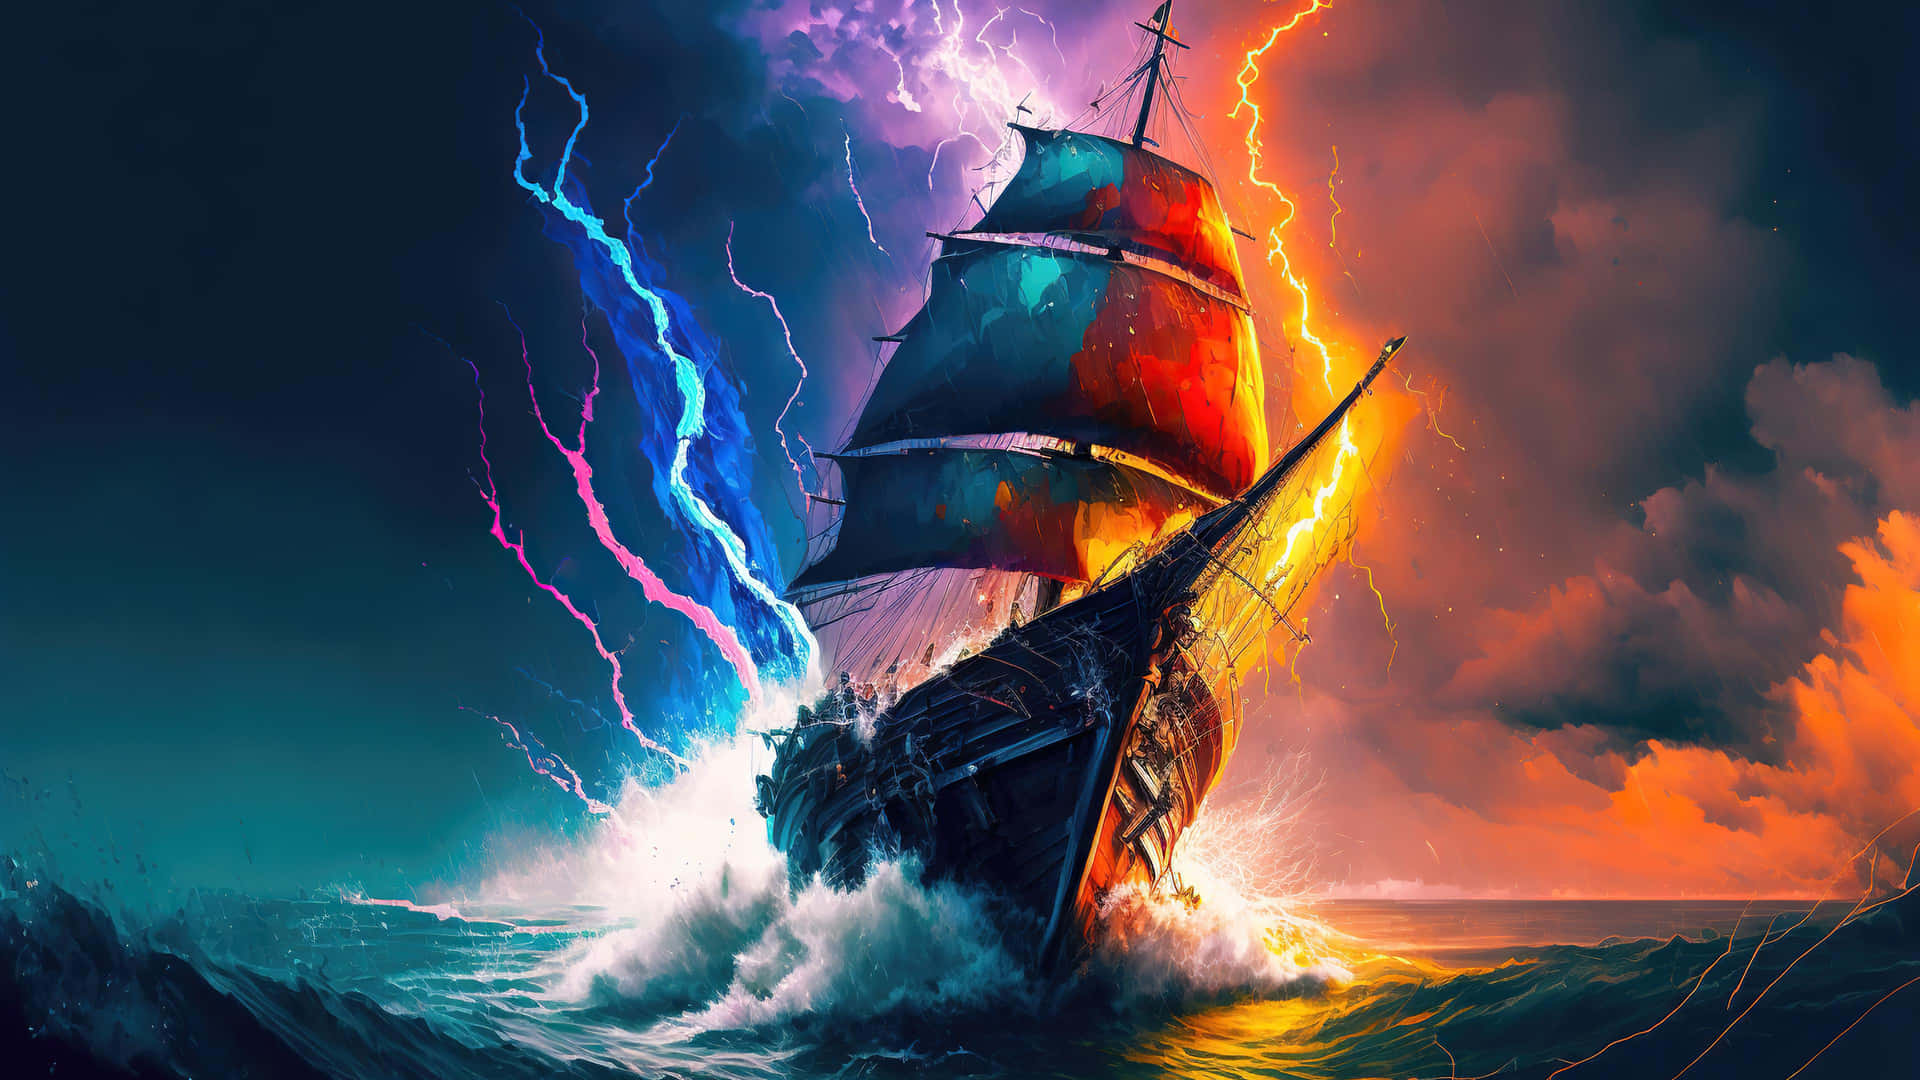 Epic_ Sea_ Storm_and_ Sailing_ Ship Wallpaper